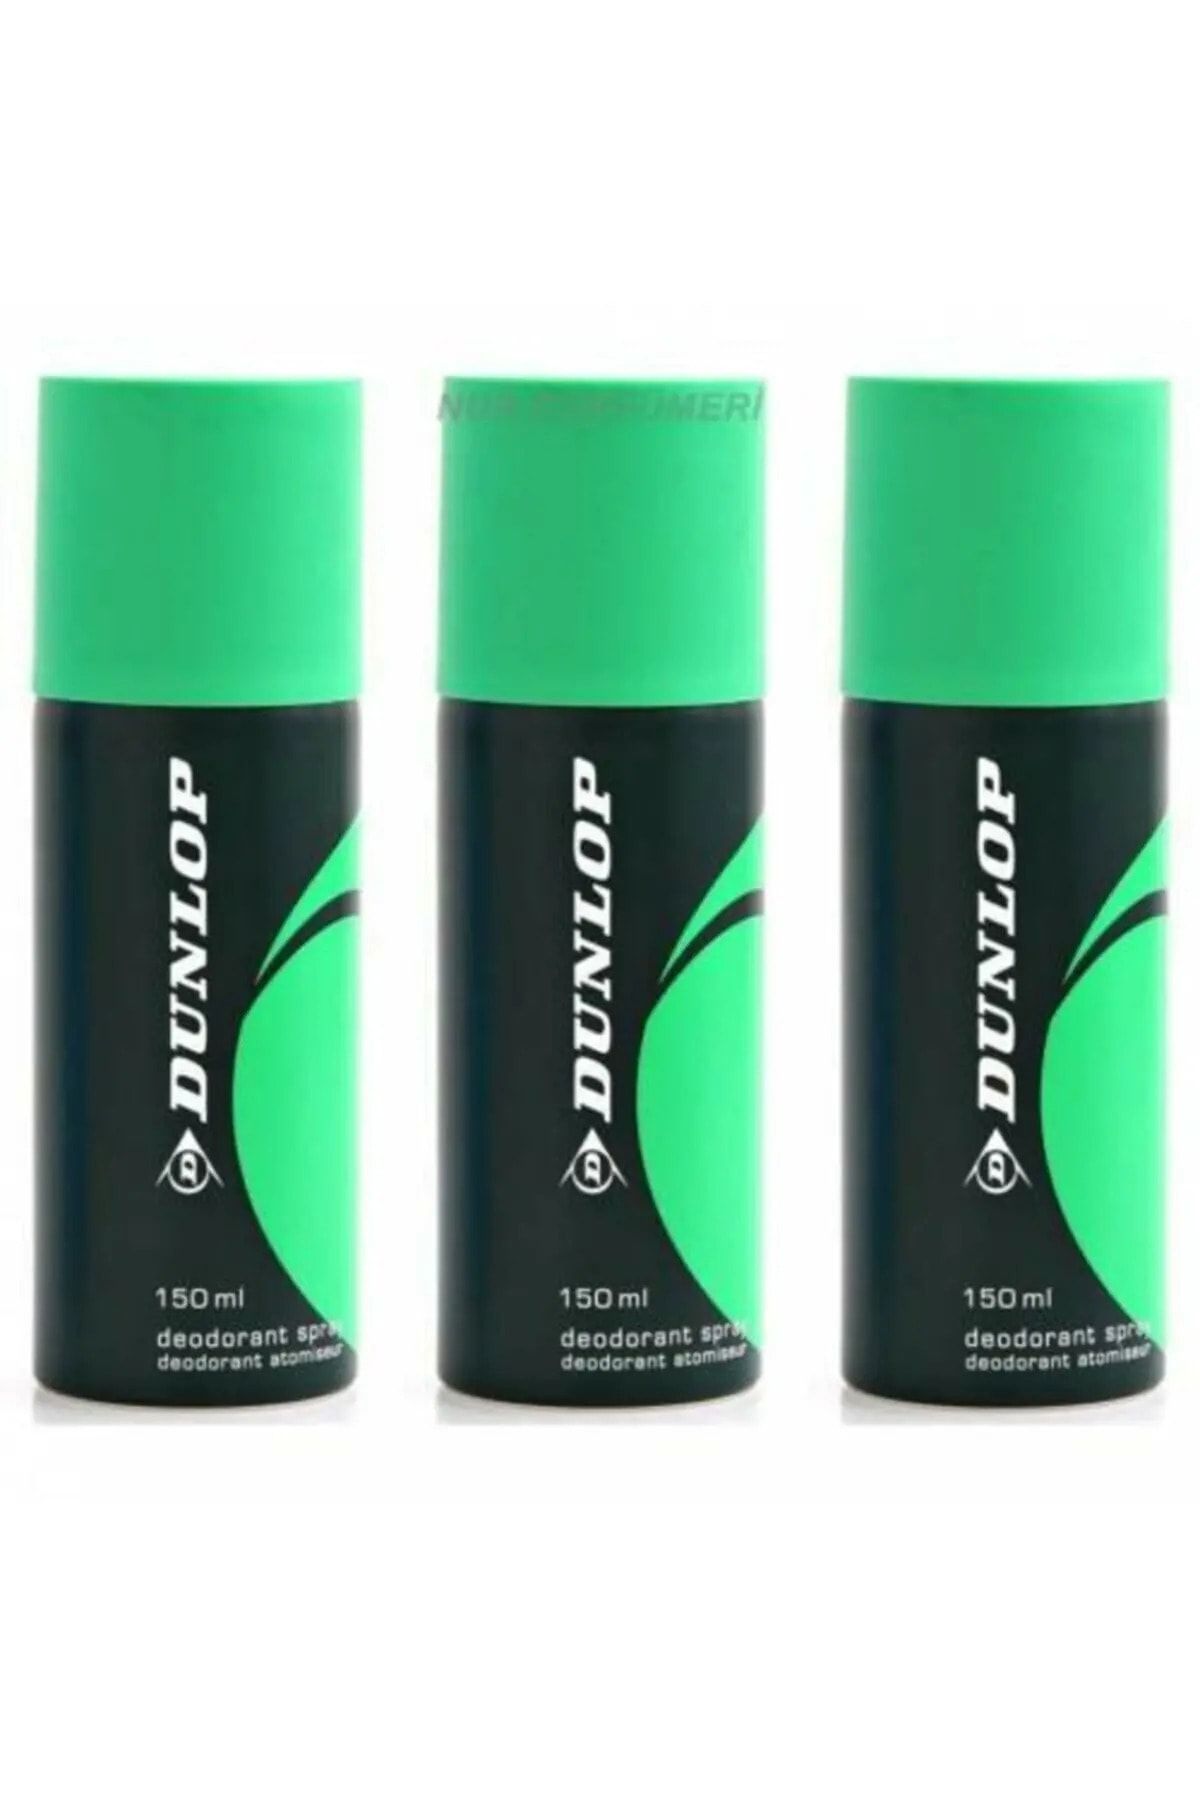 Dunlop Chic Sport Yeşil Deodorant 3'lü Set